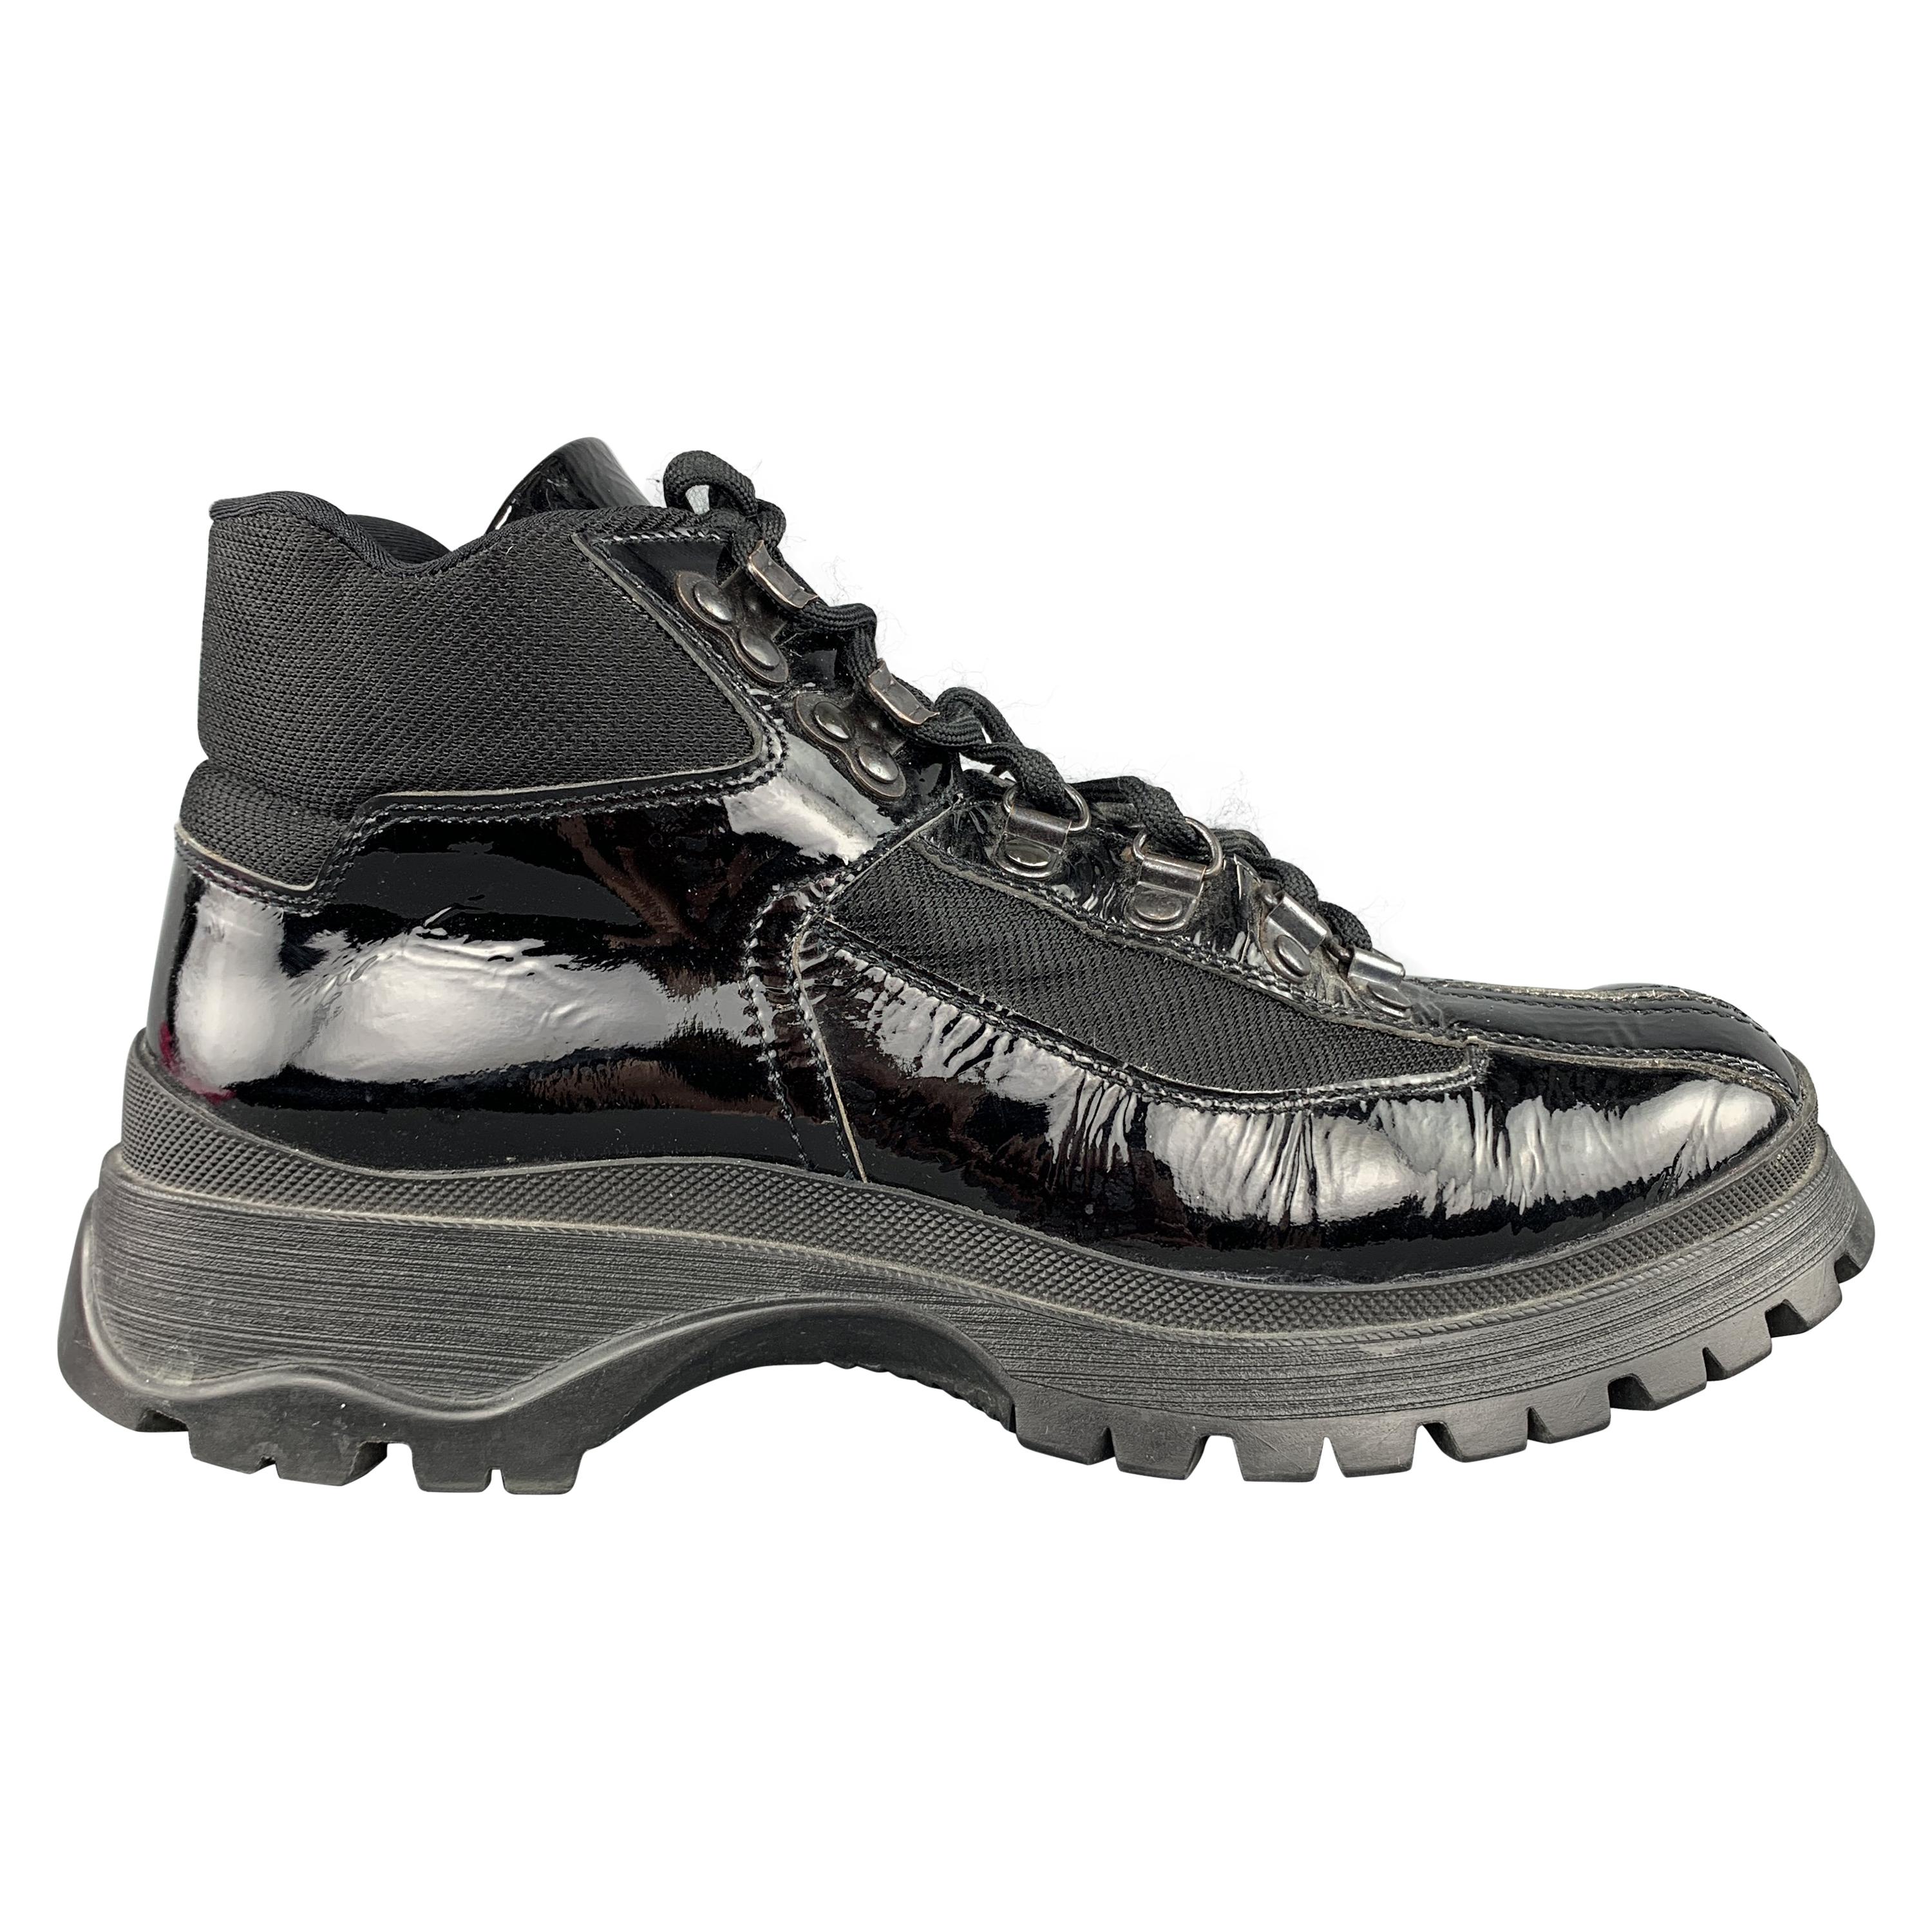  PRADA Size 7 Black Nylon Patent Leather Hiking Boot Sneakers